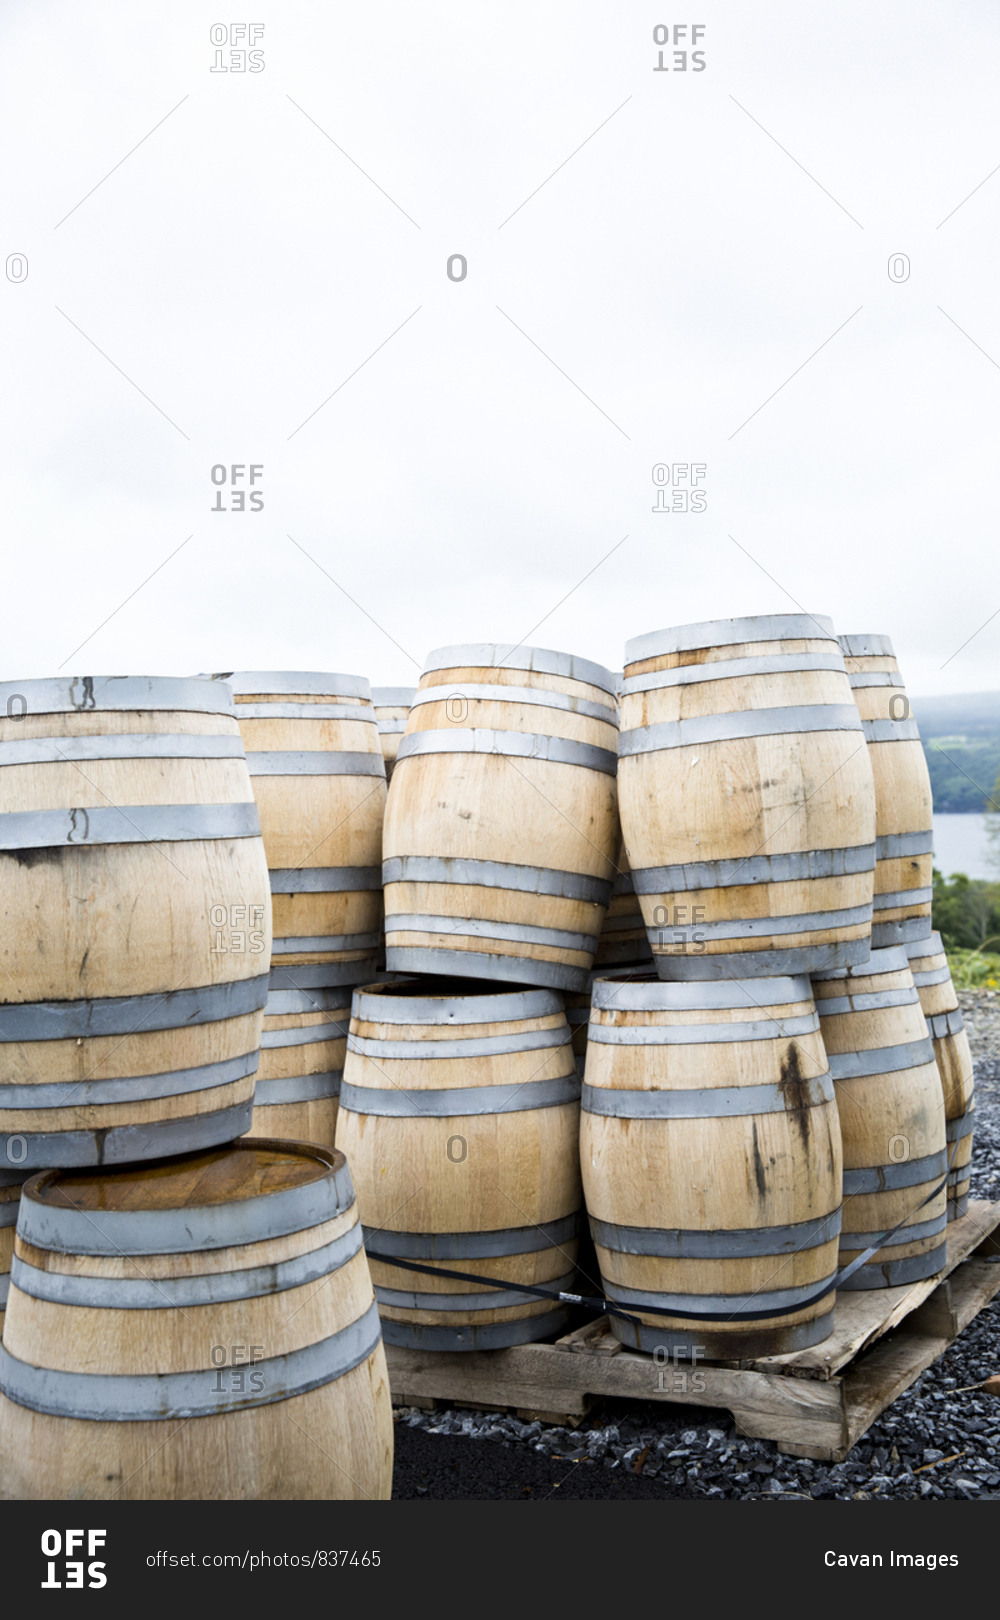 Whiskey barrels sit outside of a distillery